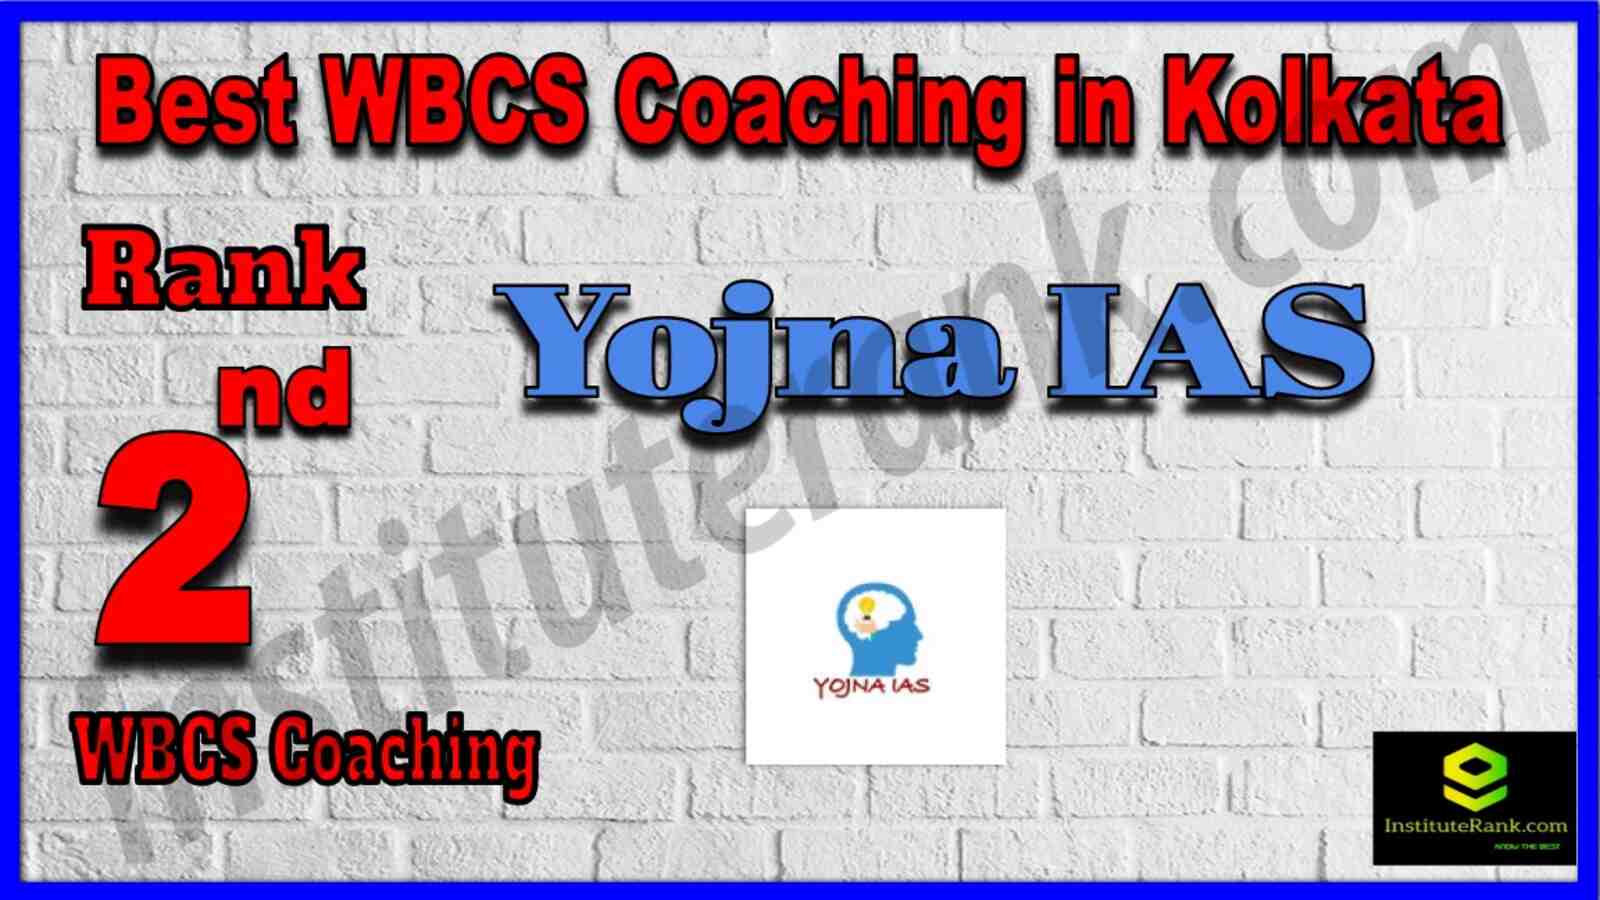 Rank 2 Best WBCS Coaching in Kolkata